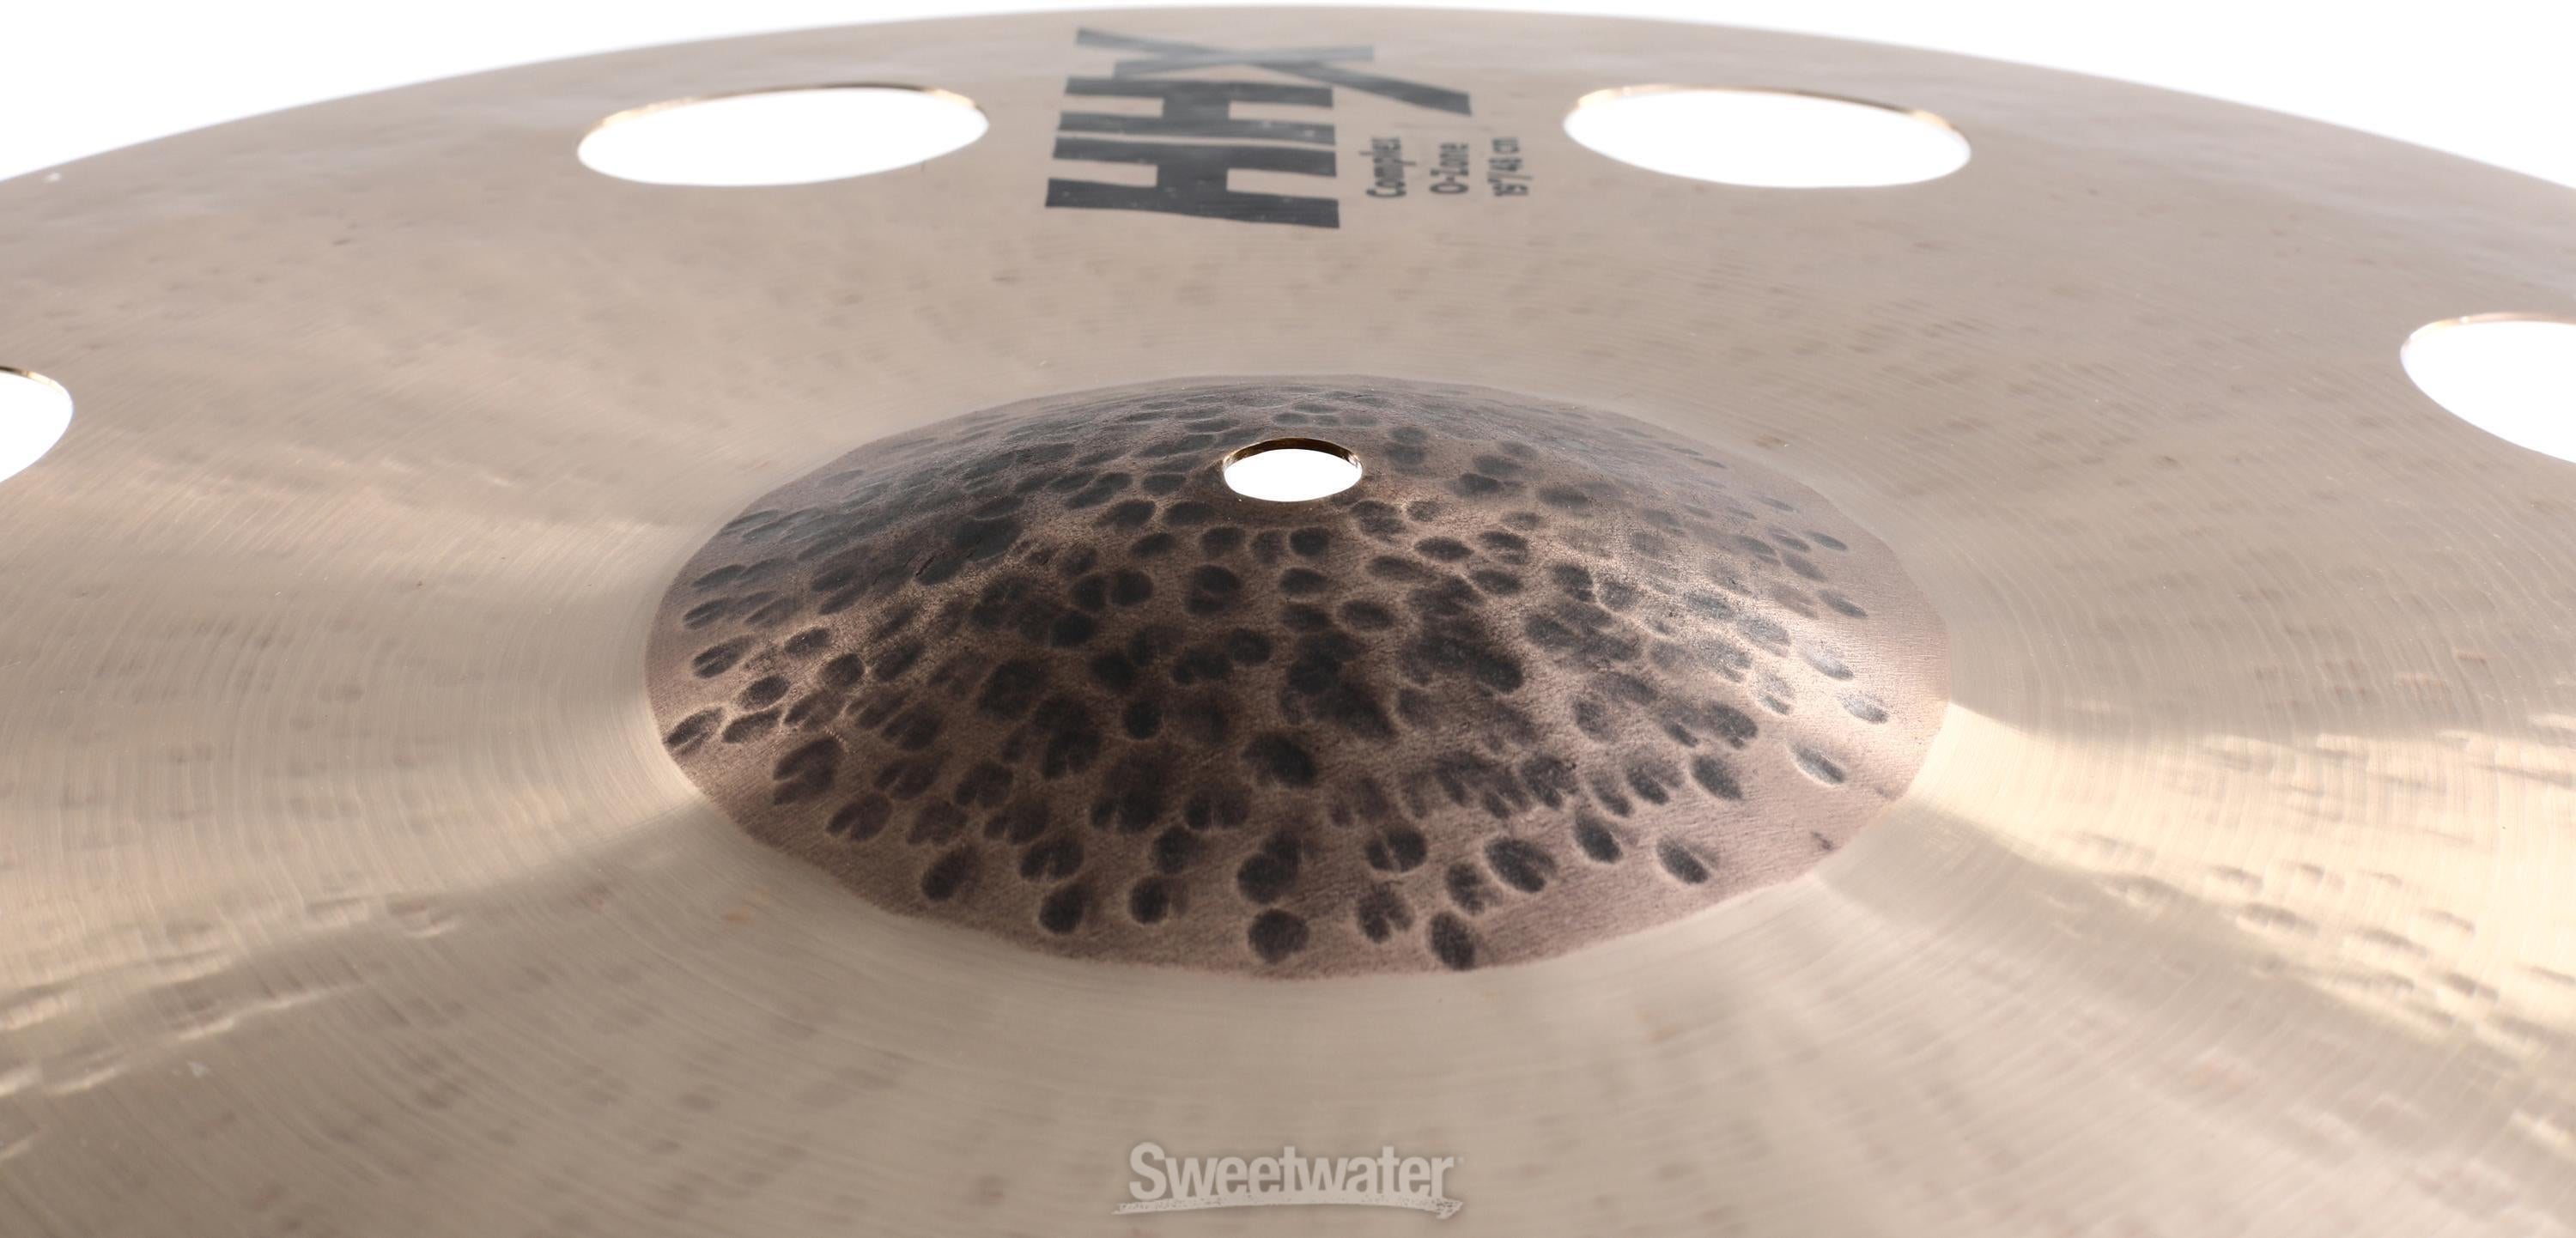 Sabian 19 inch HHX Complex O-Zone Crash Cymbal | Sweetwater